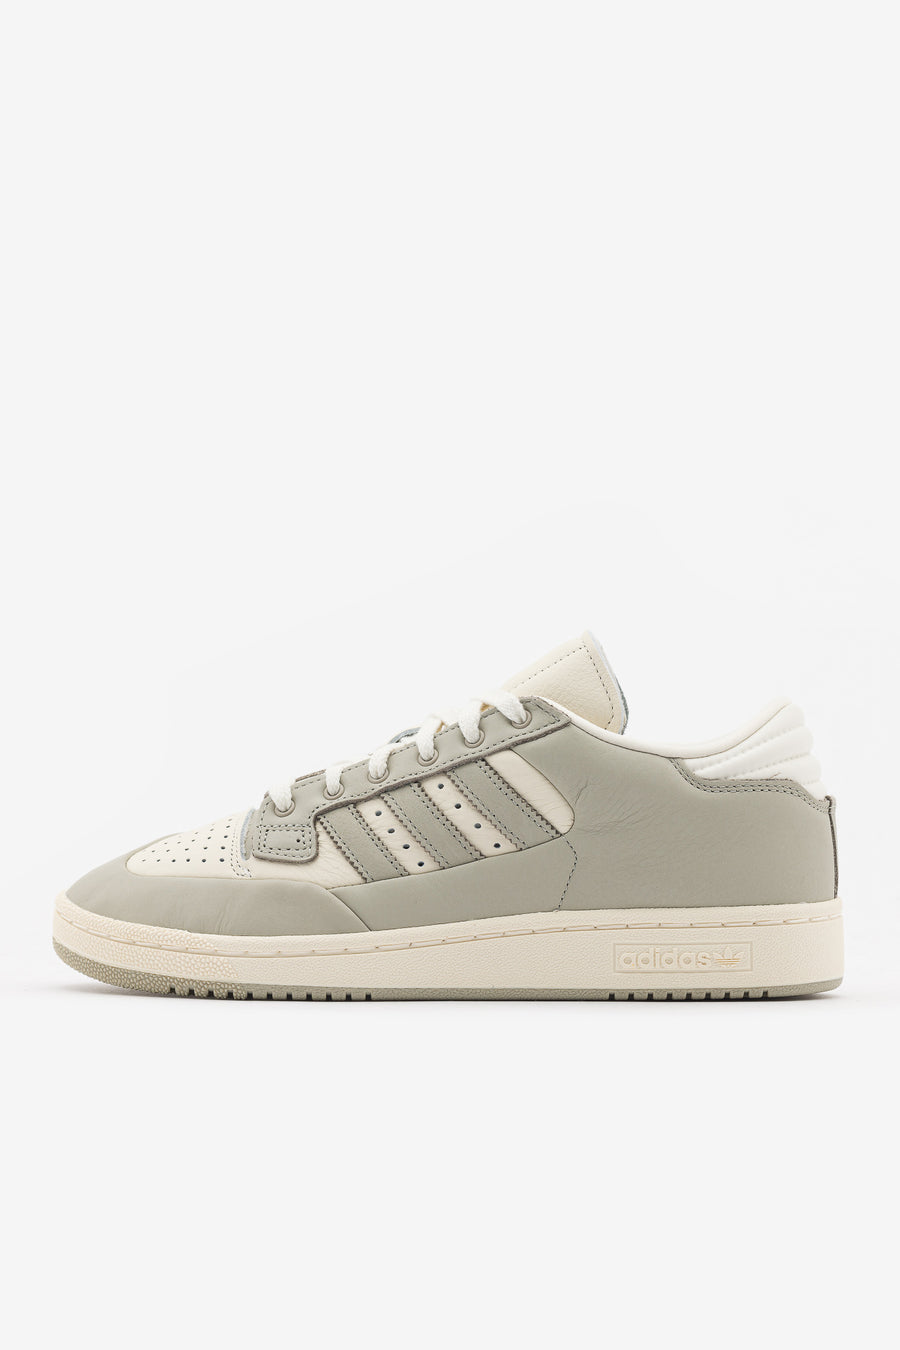 adidas - Men\'s in White Cetennial White/Cloud Lo 85 Sesame/Cream Sneaker 001